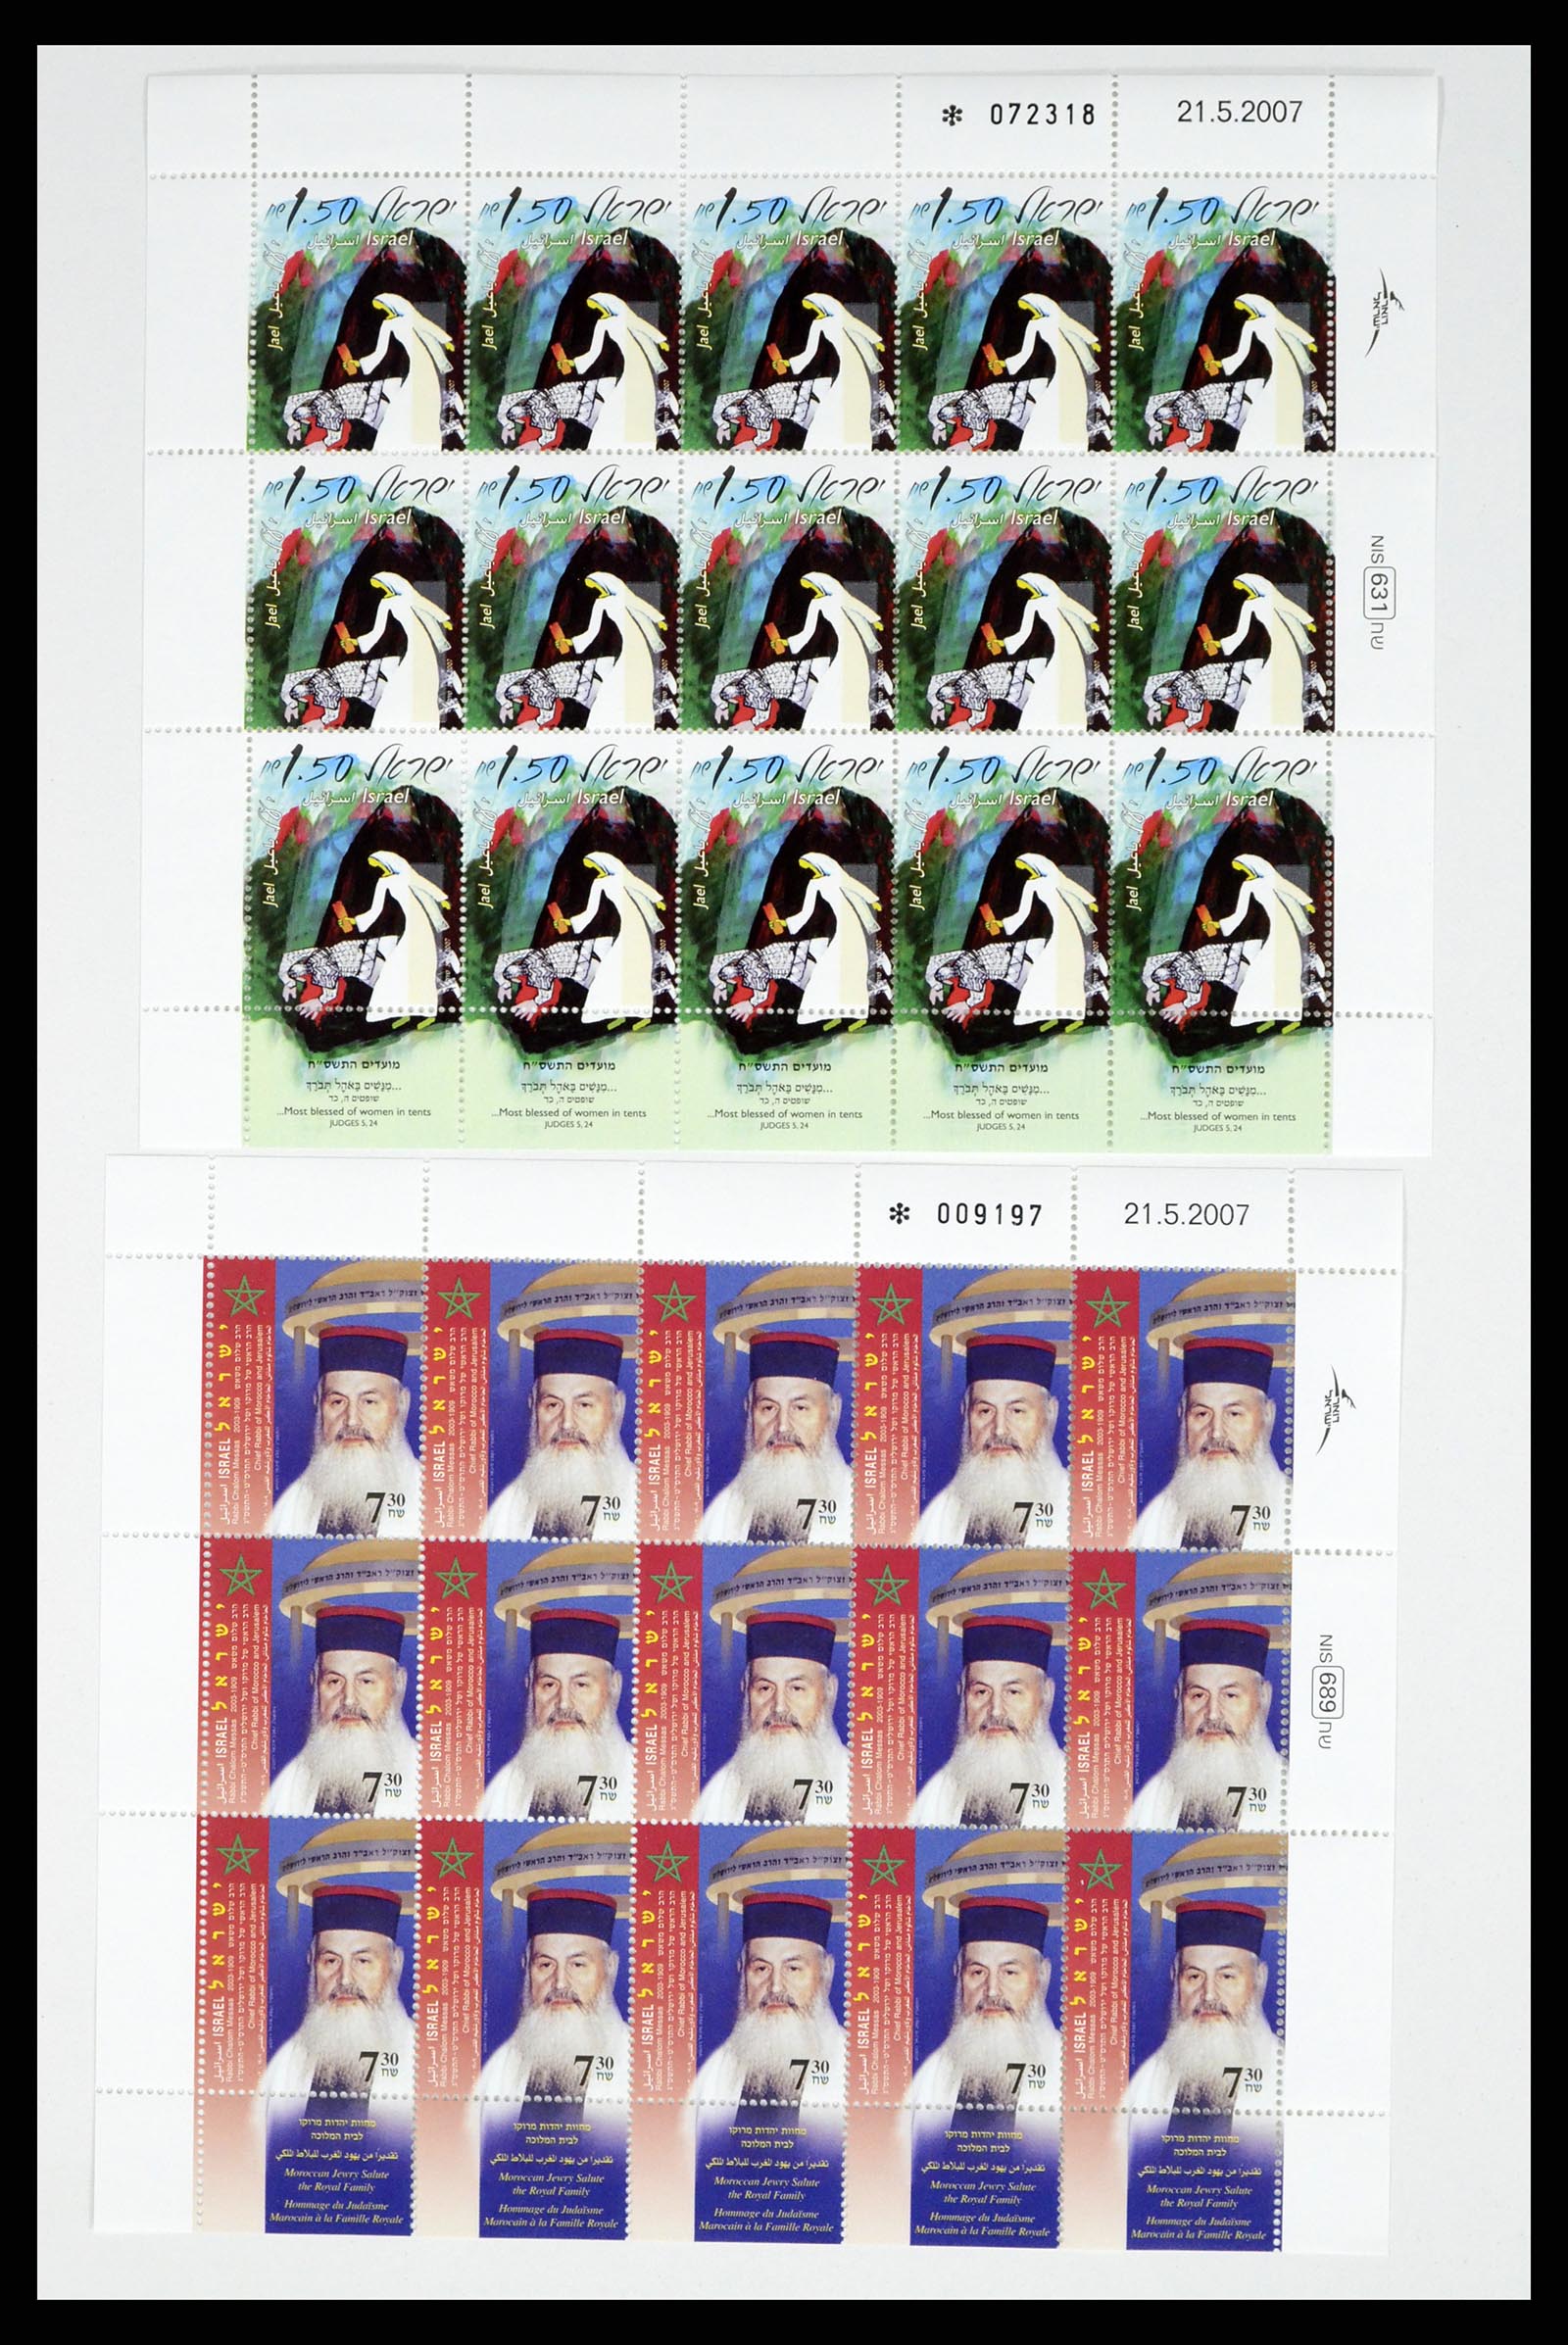 37779 041 - Stamp collection 37779 Israel sheetlets 1986-2009.